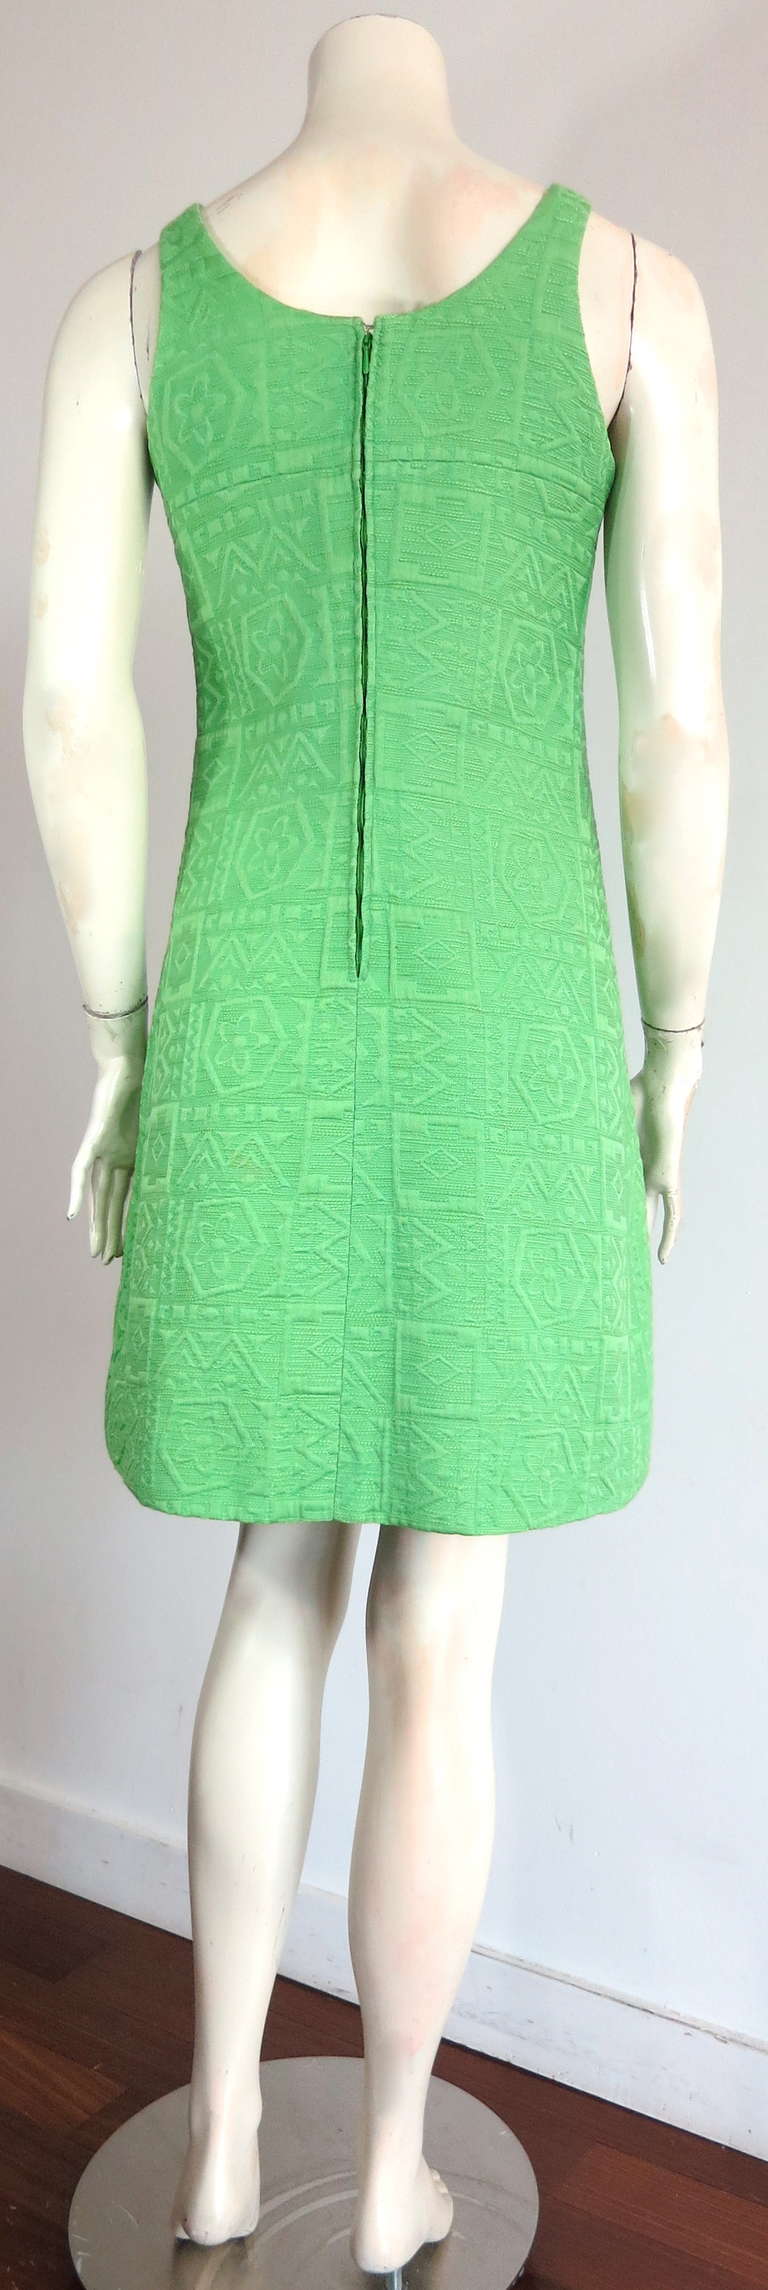 1960's LOUIS FERAUD Mod sun dress For Sale 2